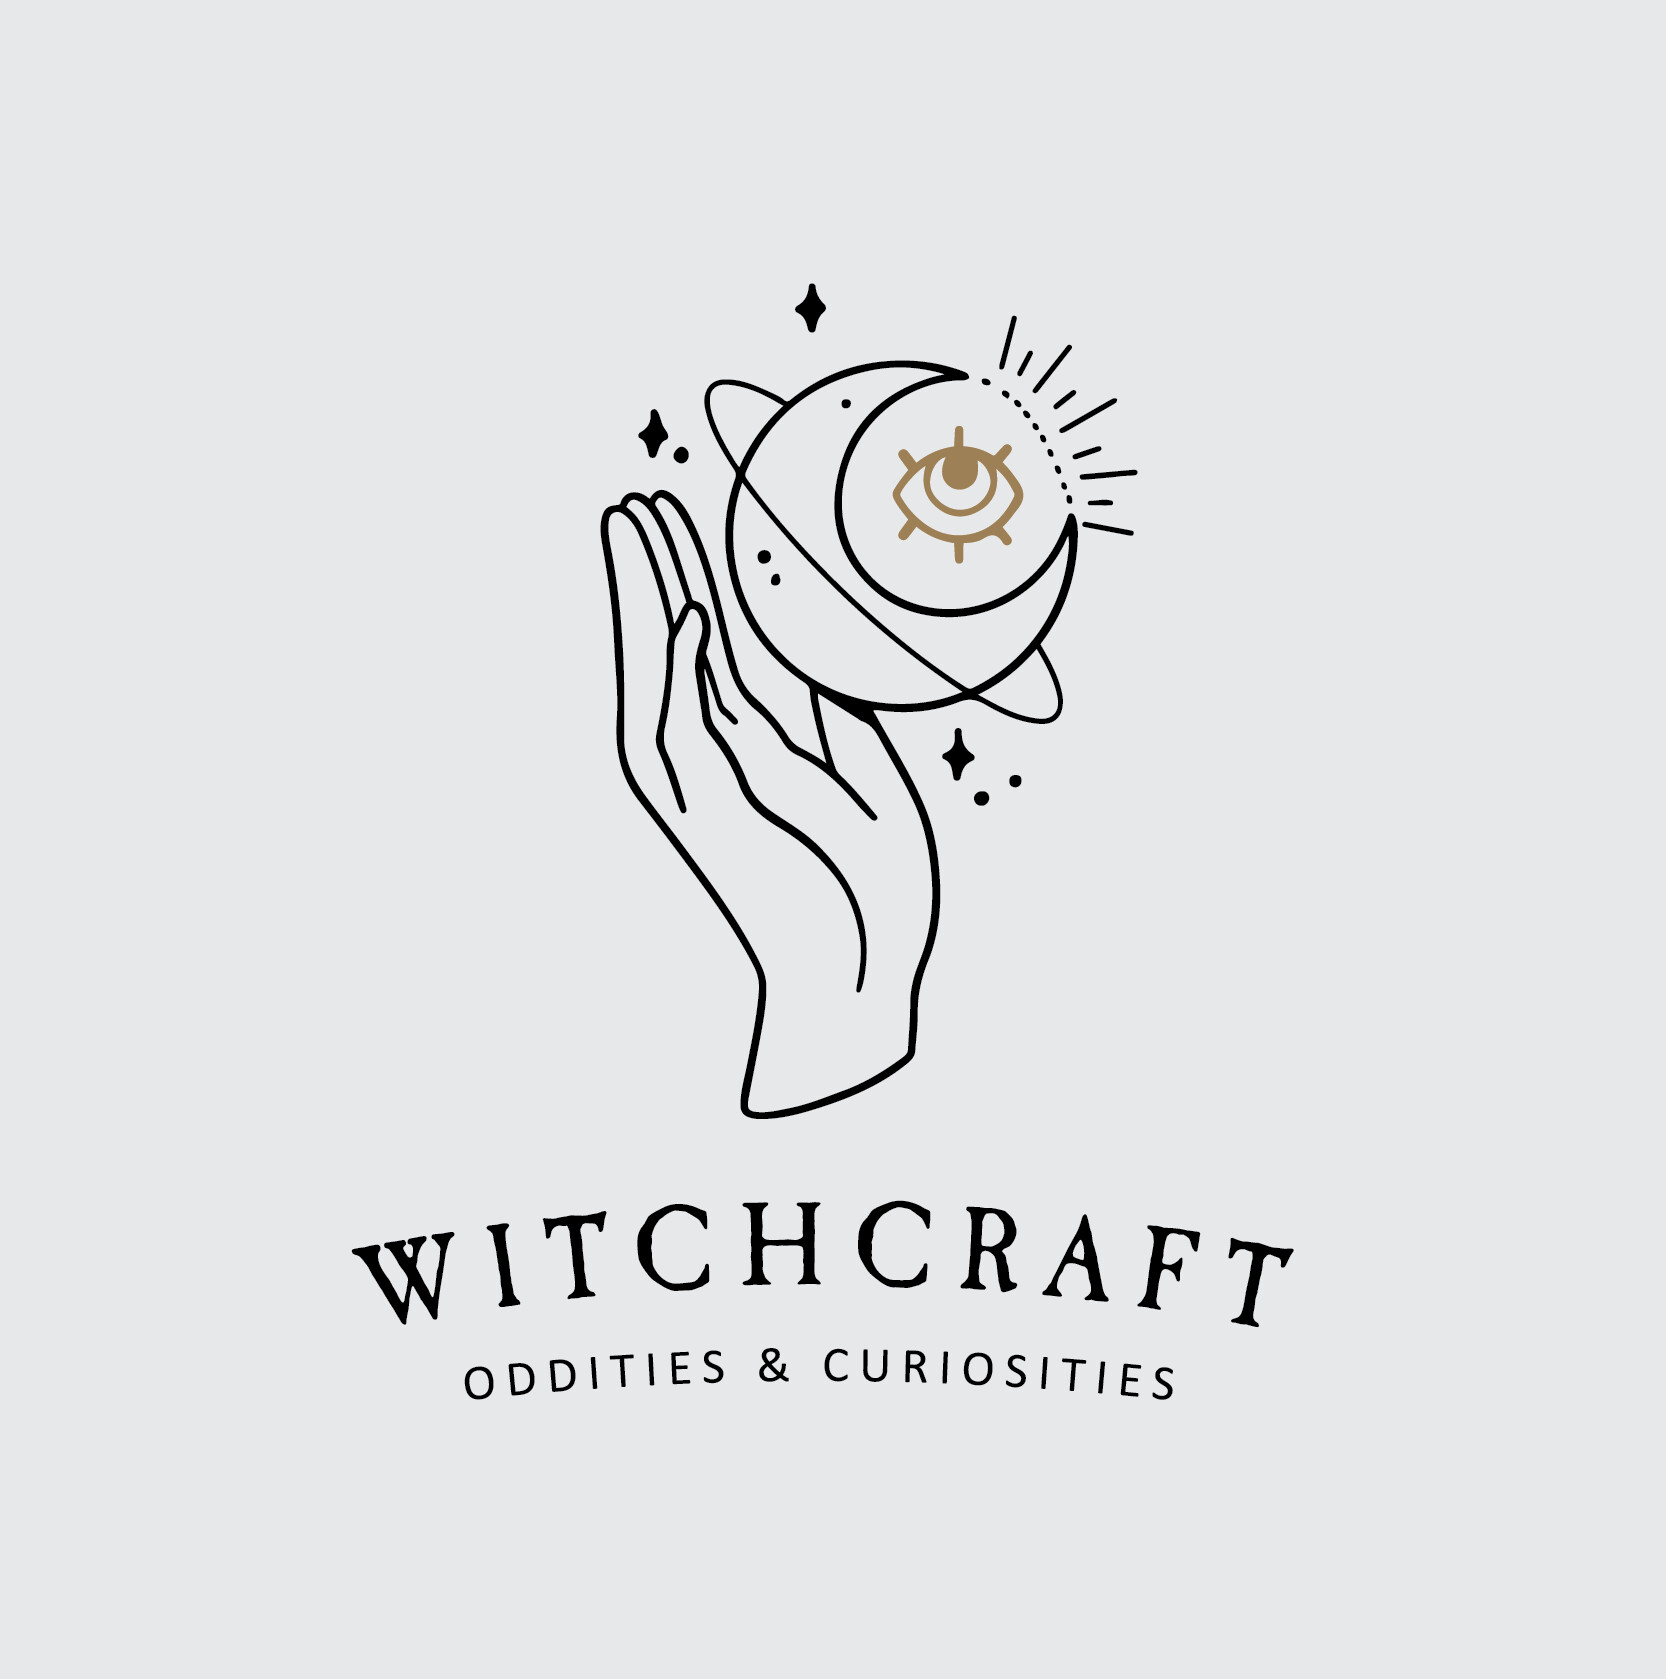 Kate Elizabeth - Witchcraft - Oddities and Curiosities Logo